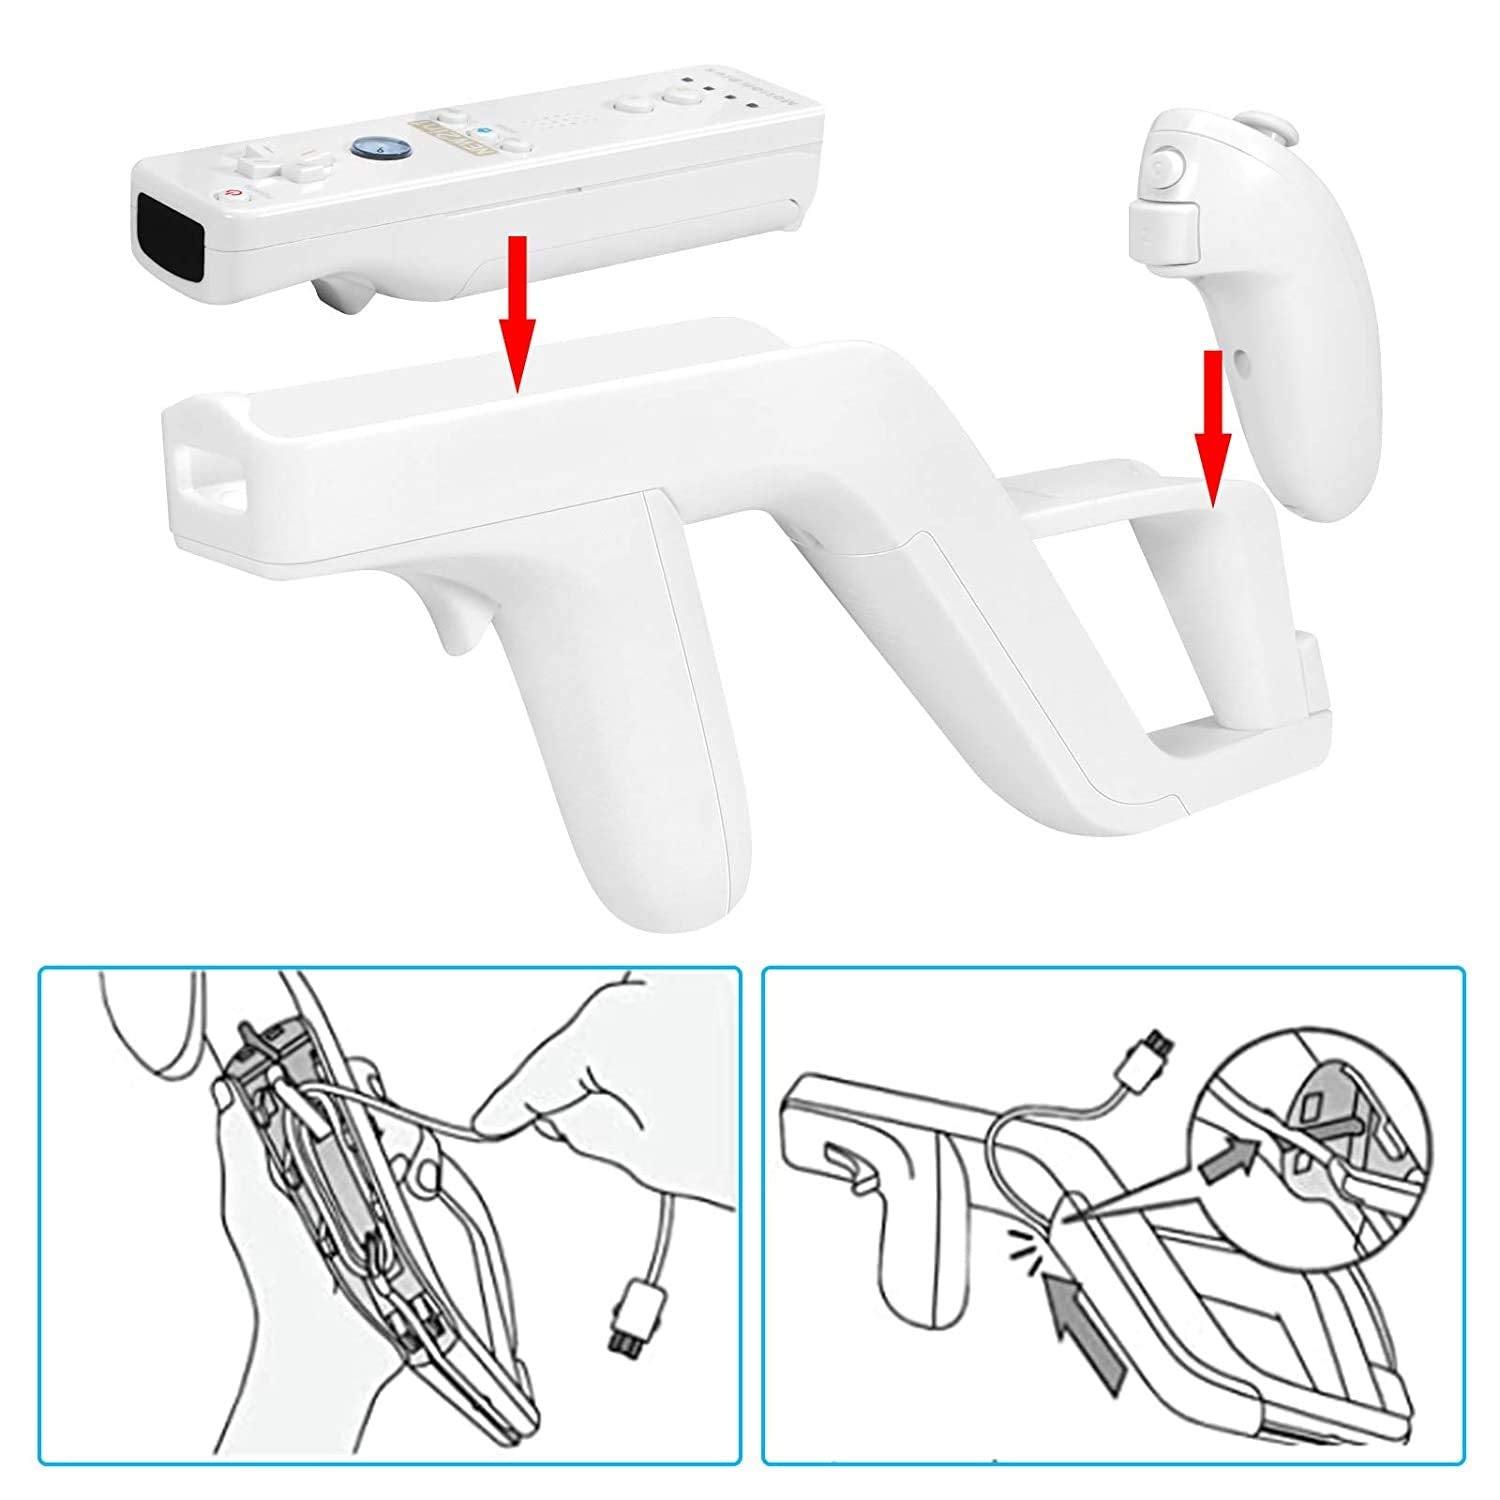 2 Pieces x Nintendo Wii Compatible Gun Controller Wii Accessories - Office Catch